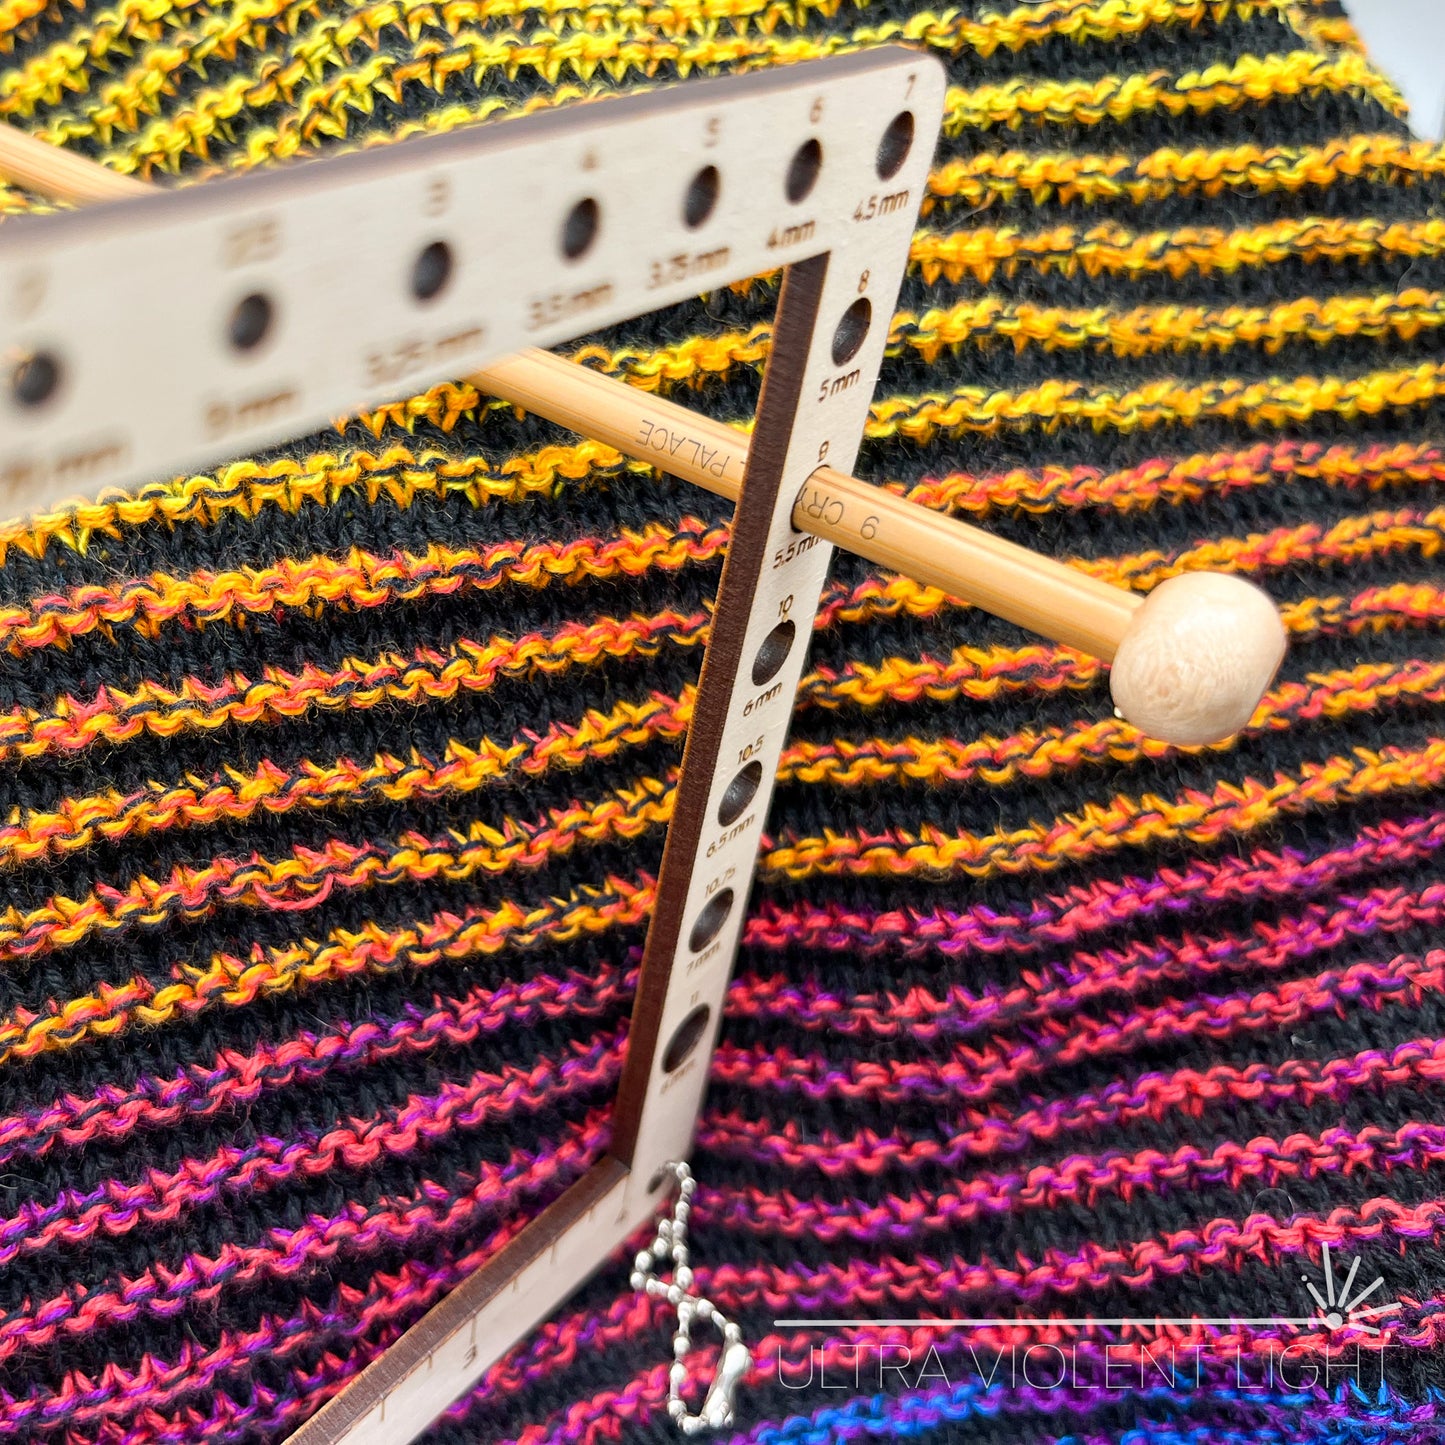 Knitting and crochet swatch gauge ruler